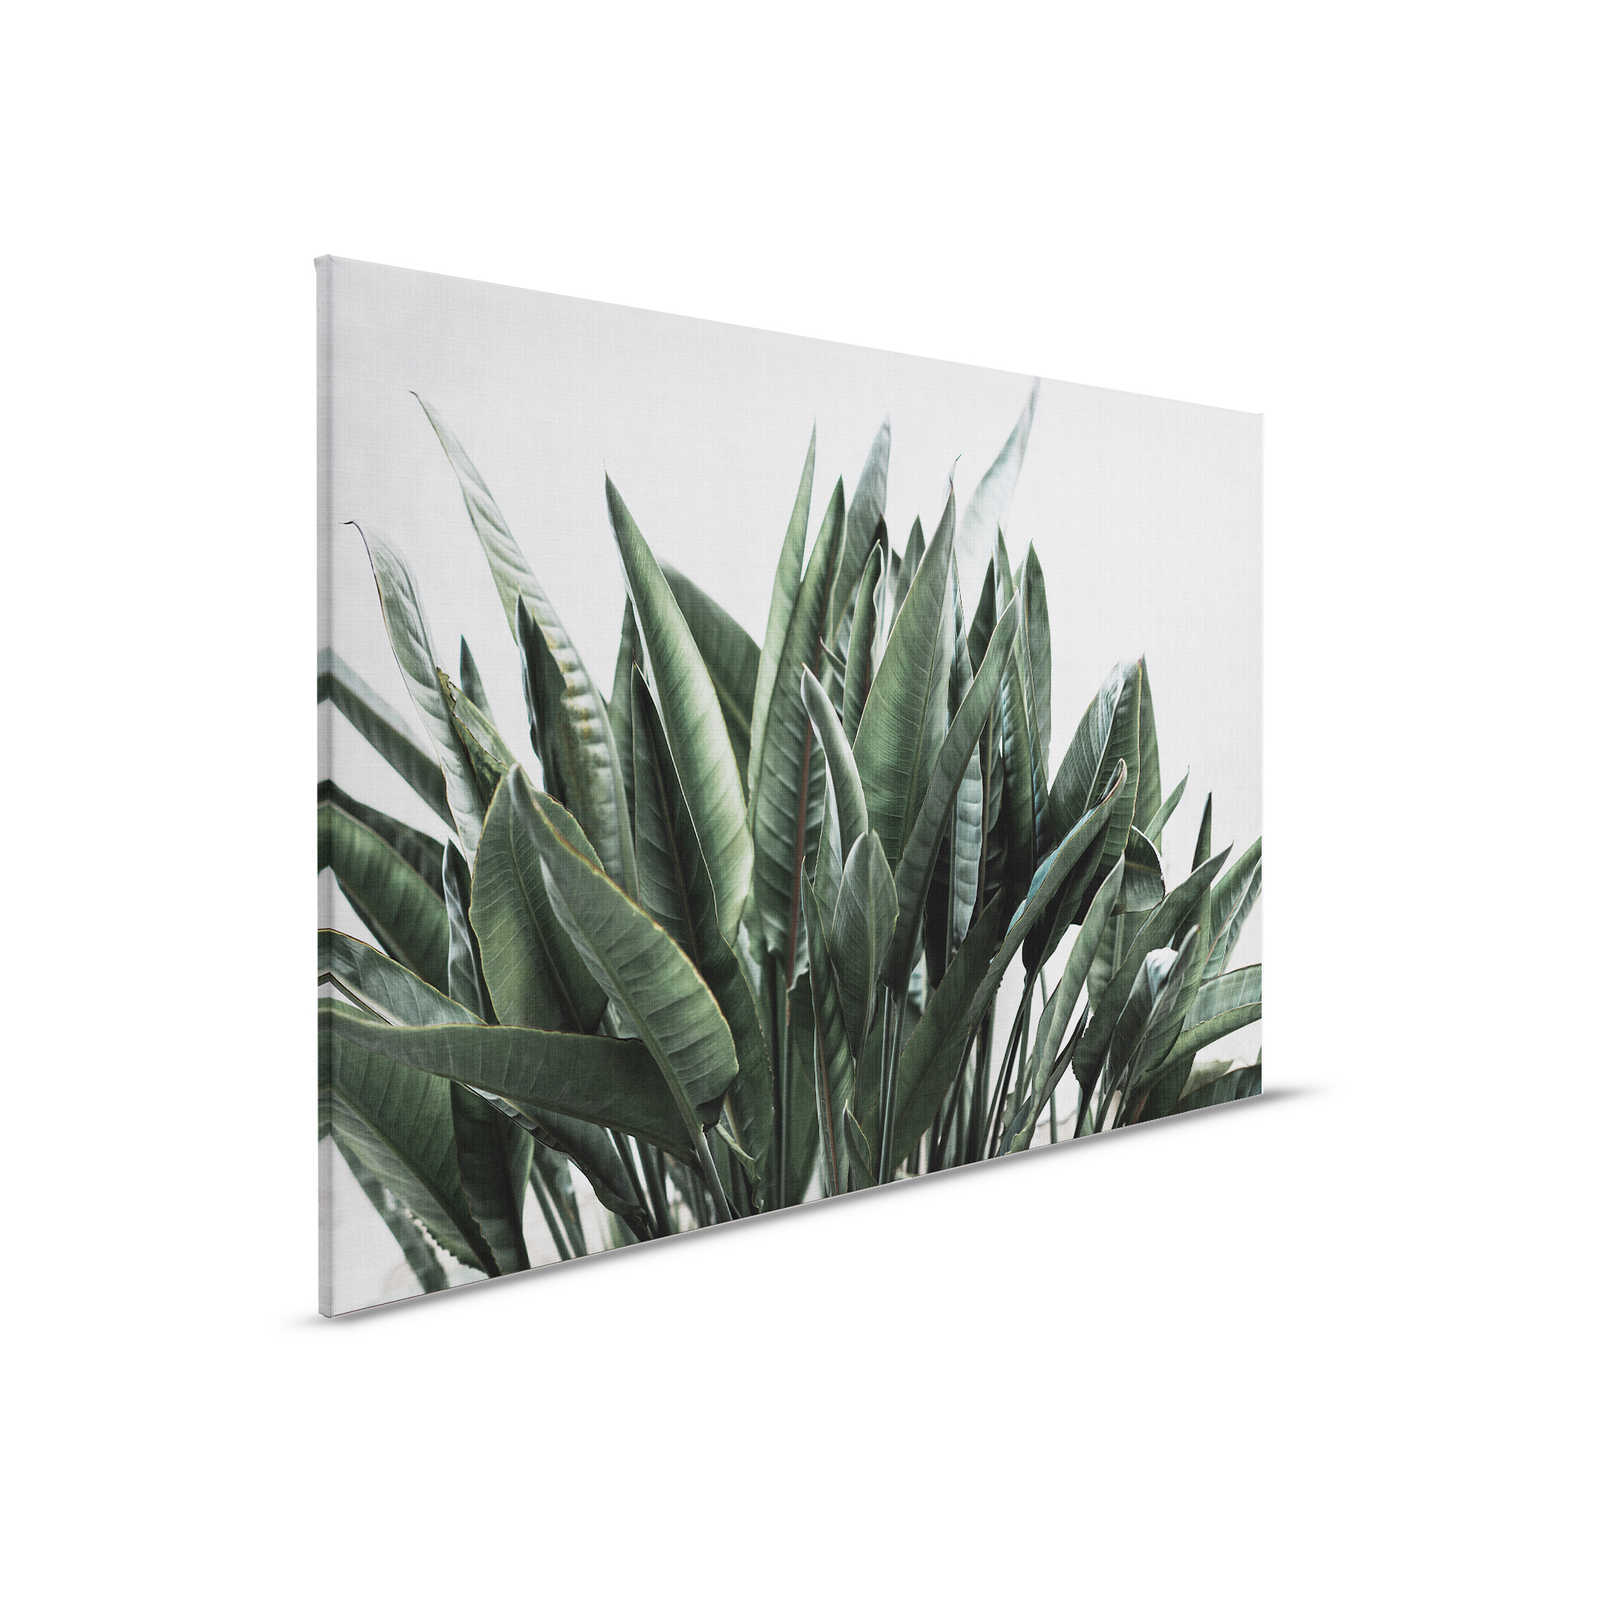 Urban jungle 2 - Palm leaves canvas picture, natural linen structure exotic plants - 0.90 m x 0.60 m
